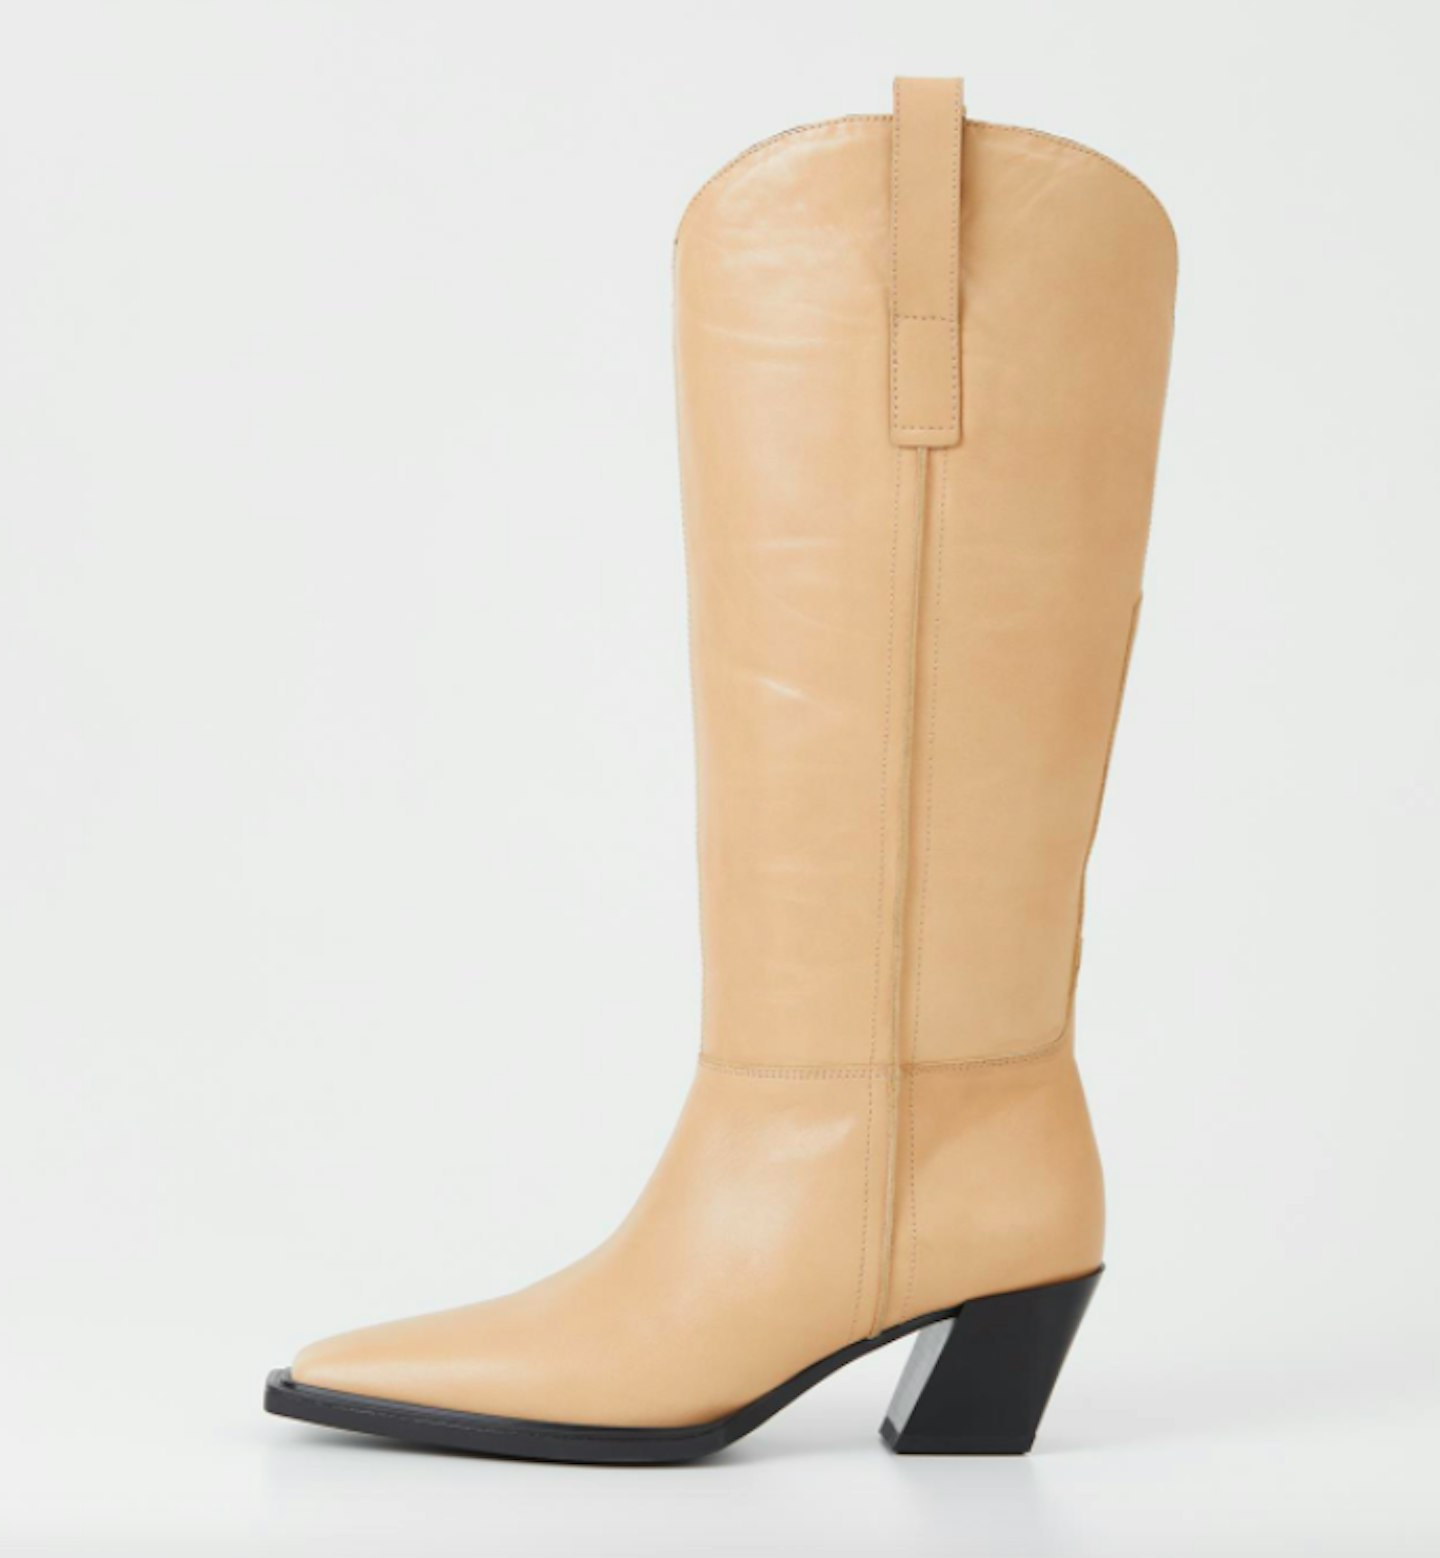 Vagabond, Alina Tall Boots, £220